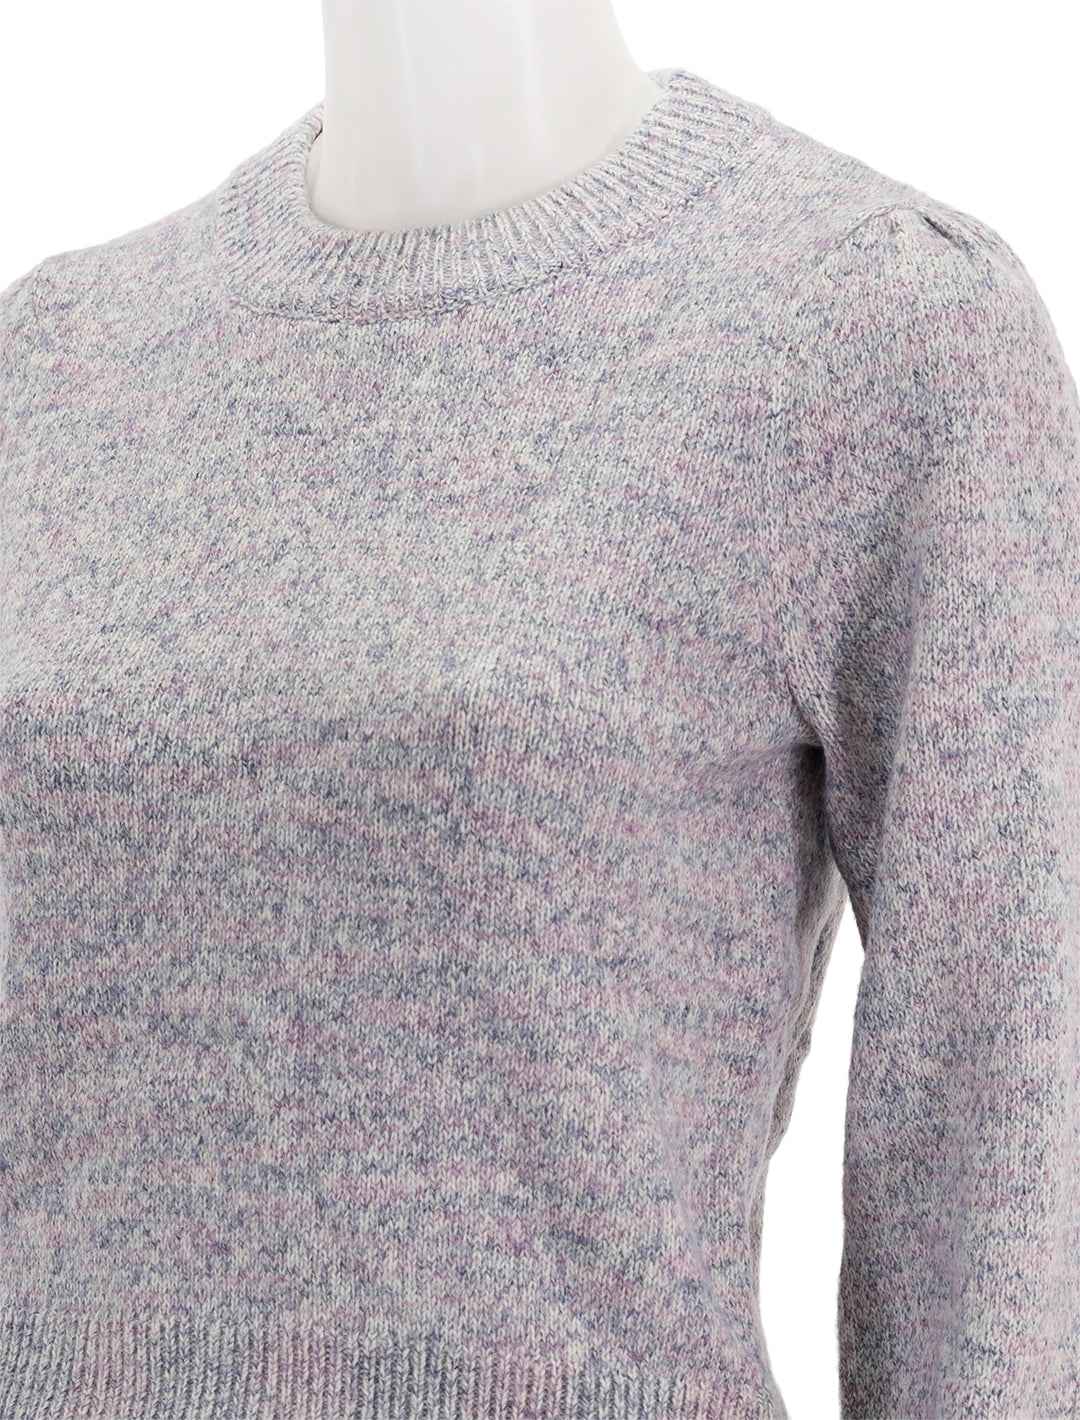 Close-up view of Marine Layer's alma puff sleeve crewneck sweater in purple heather.